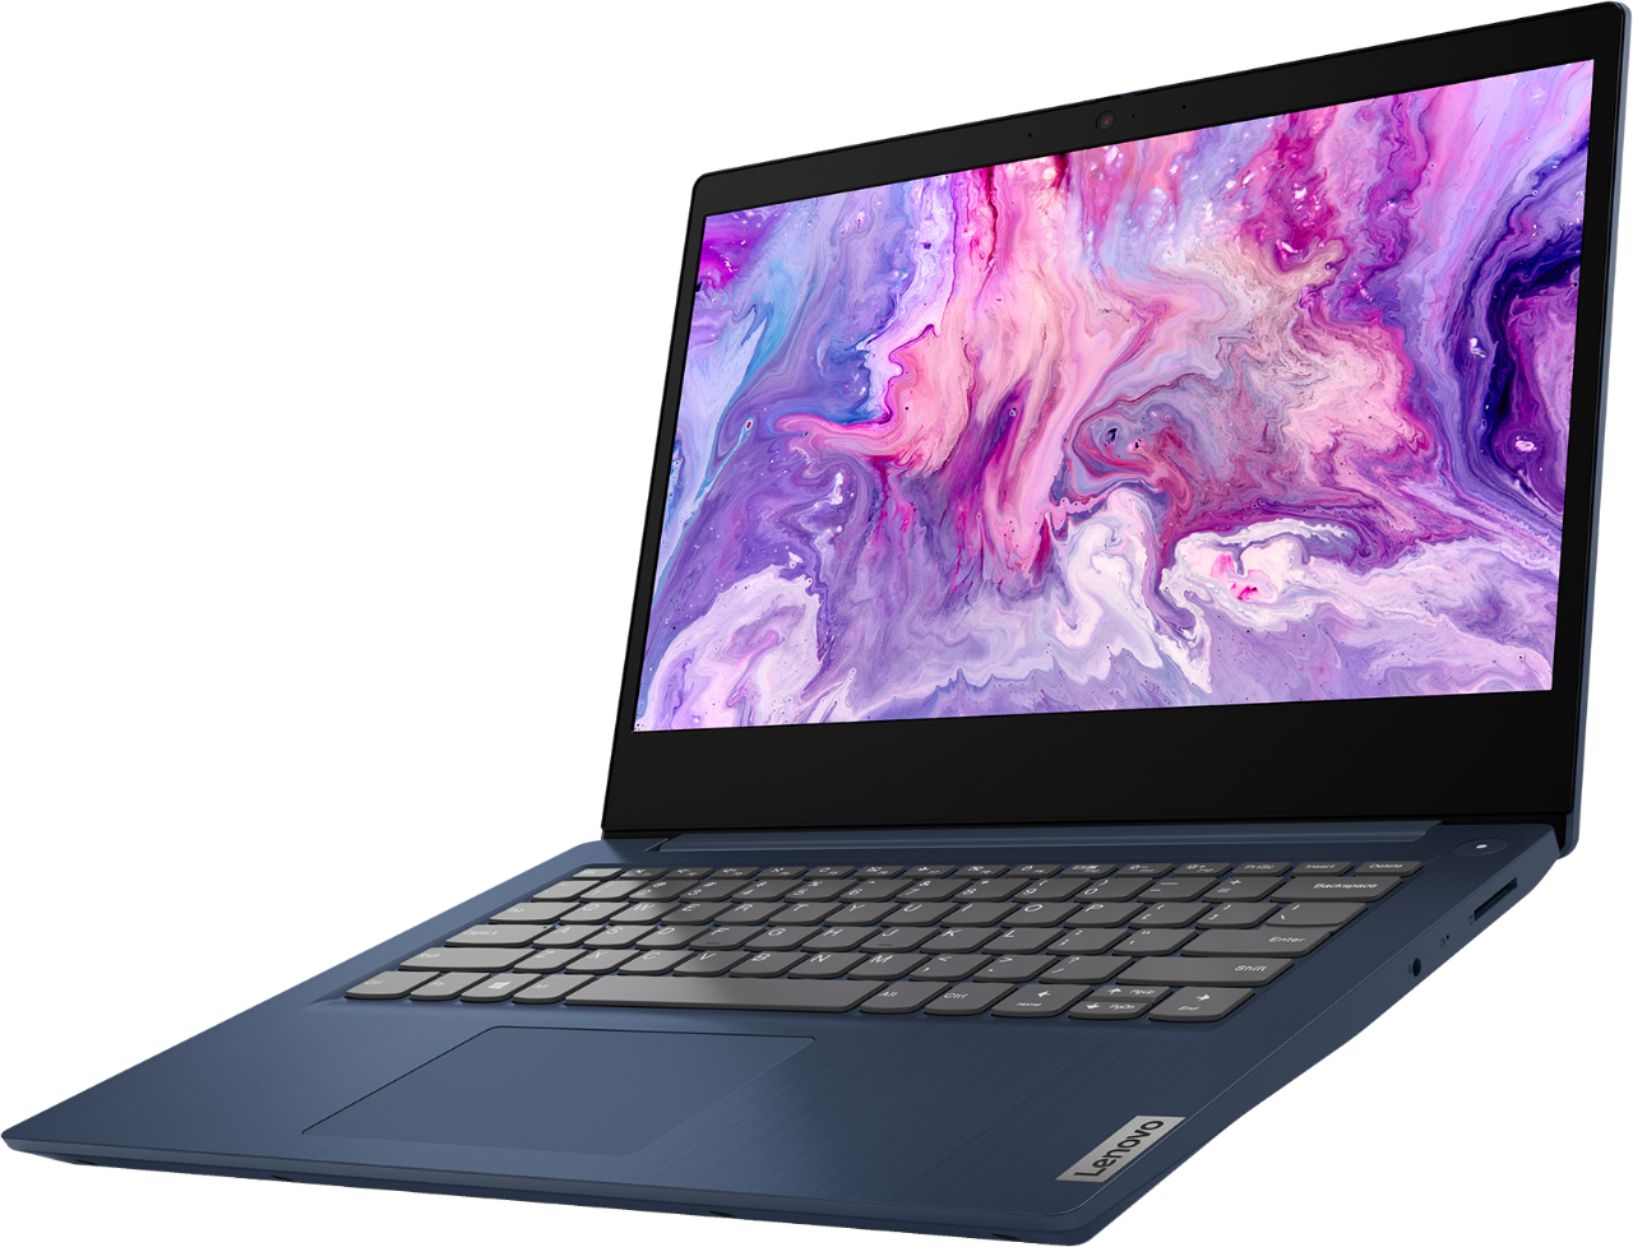 Lenovo Ideapad 3 14 Laptop Amd Ryzen 3 3250u 8gb Memory 1tb Hdd Abyss Blue 81w0009dus Best Buy - how to play roblox on thinkpad